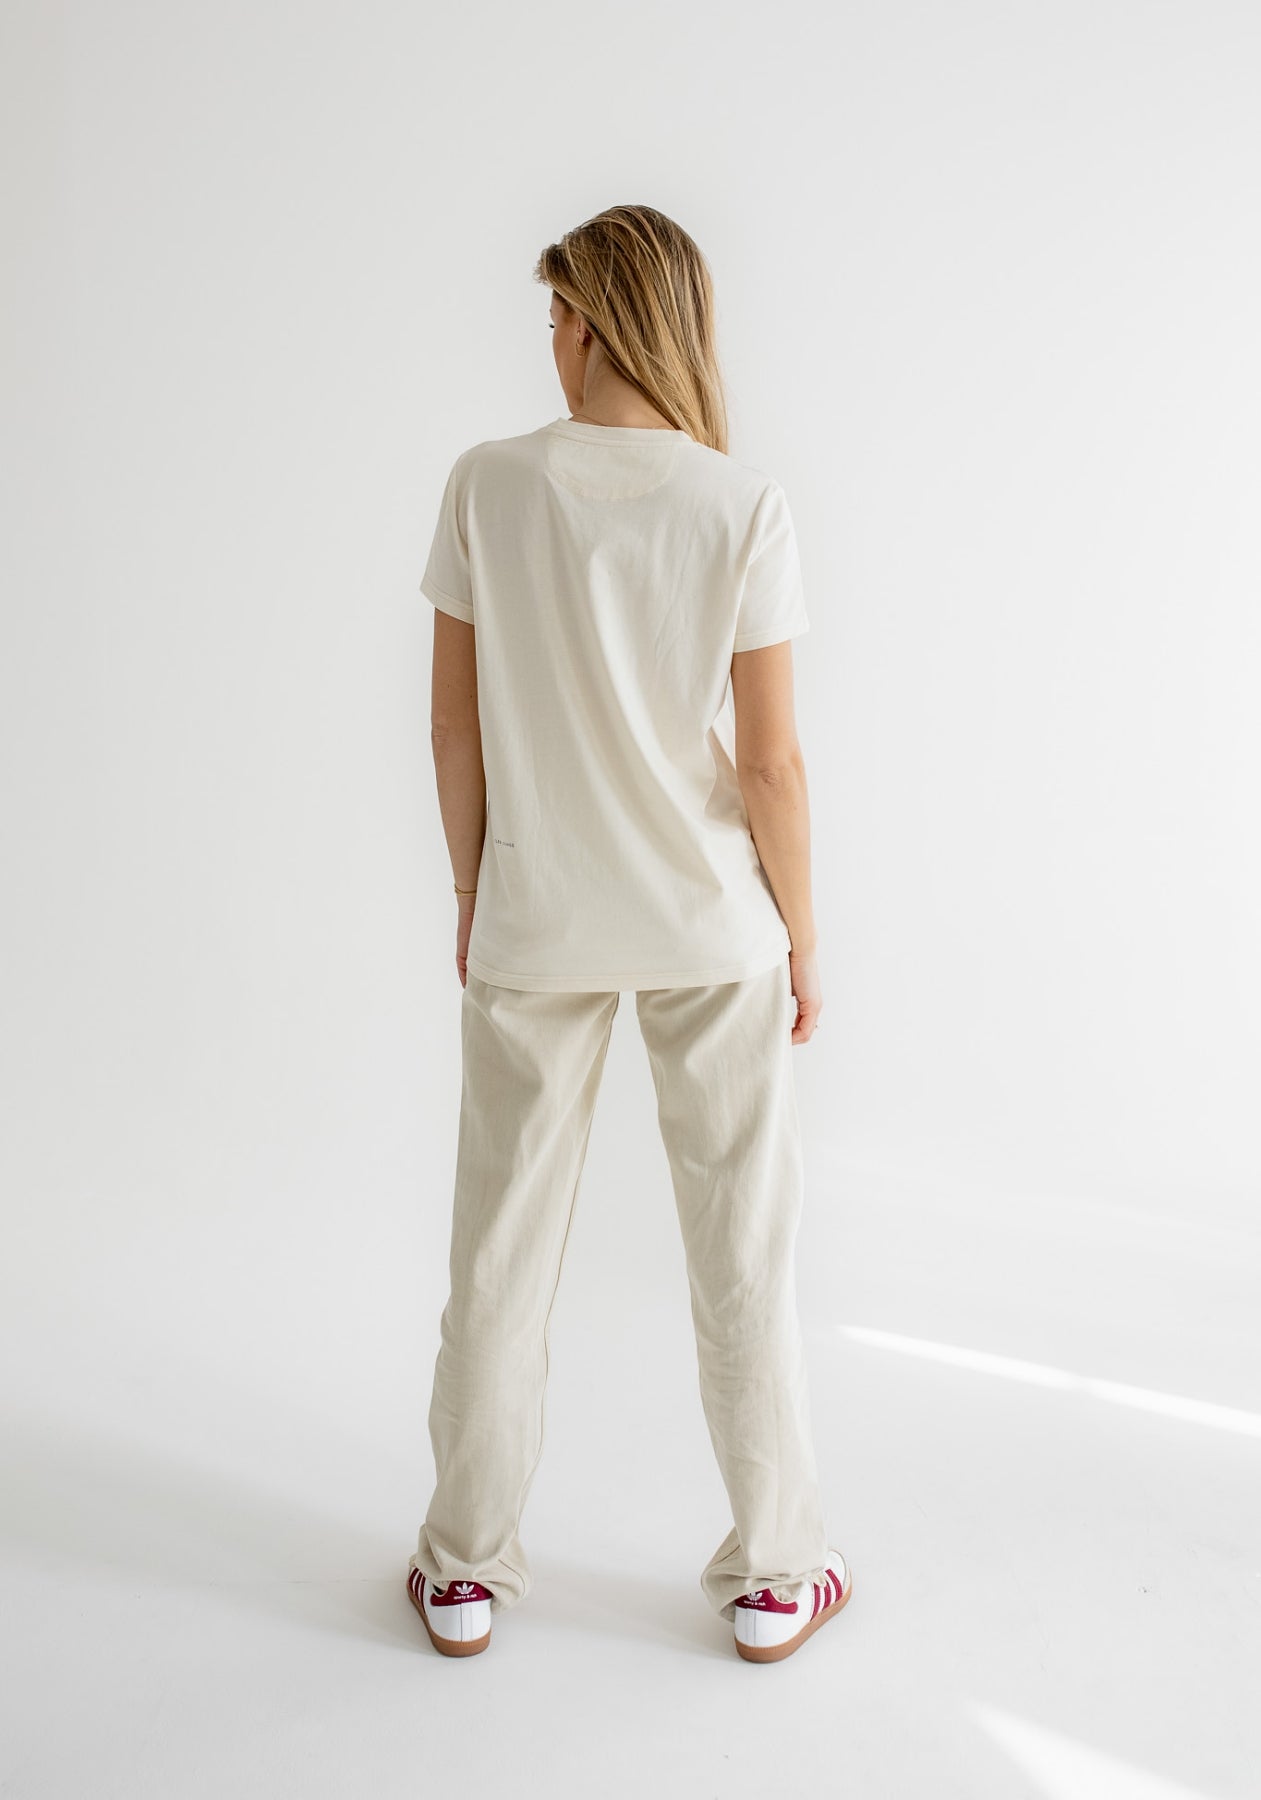 Women t-shirt organic cotton Offwhite-natural - ethically made Minimalist - regular